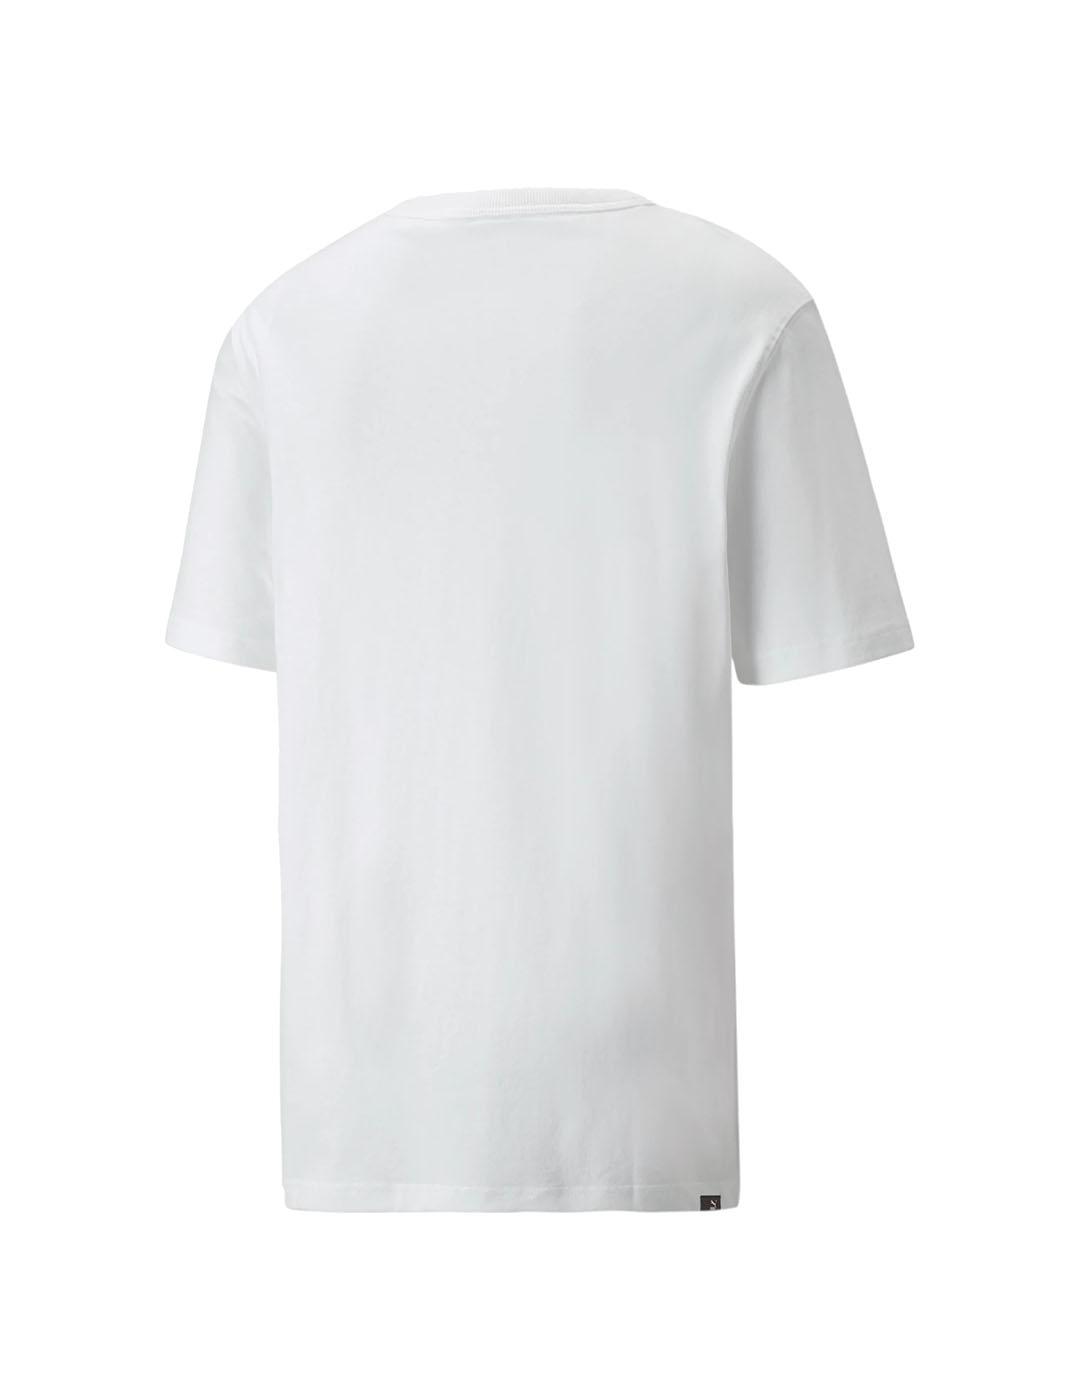 Camiseta Hombre Puma Downtown Blanco